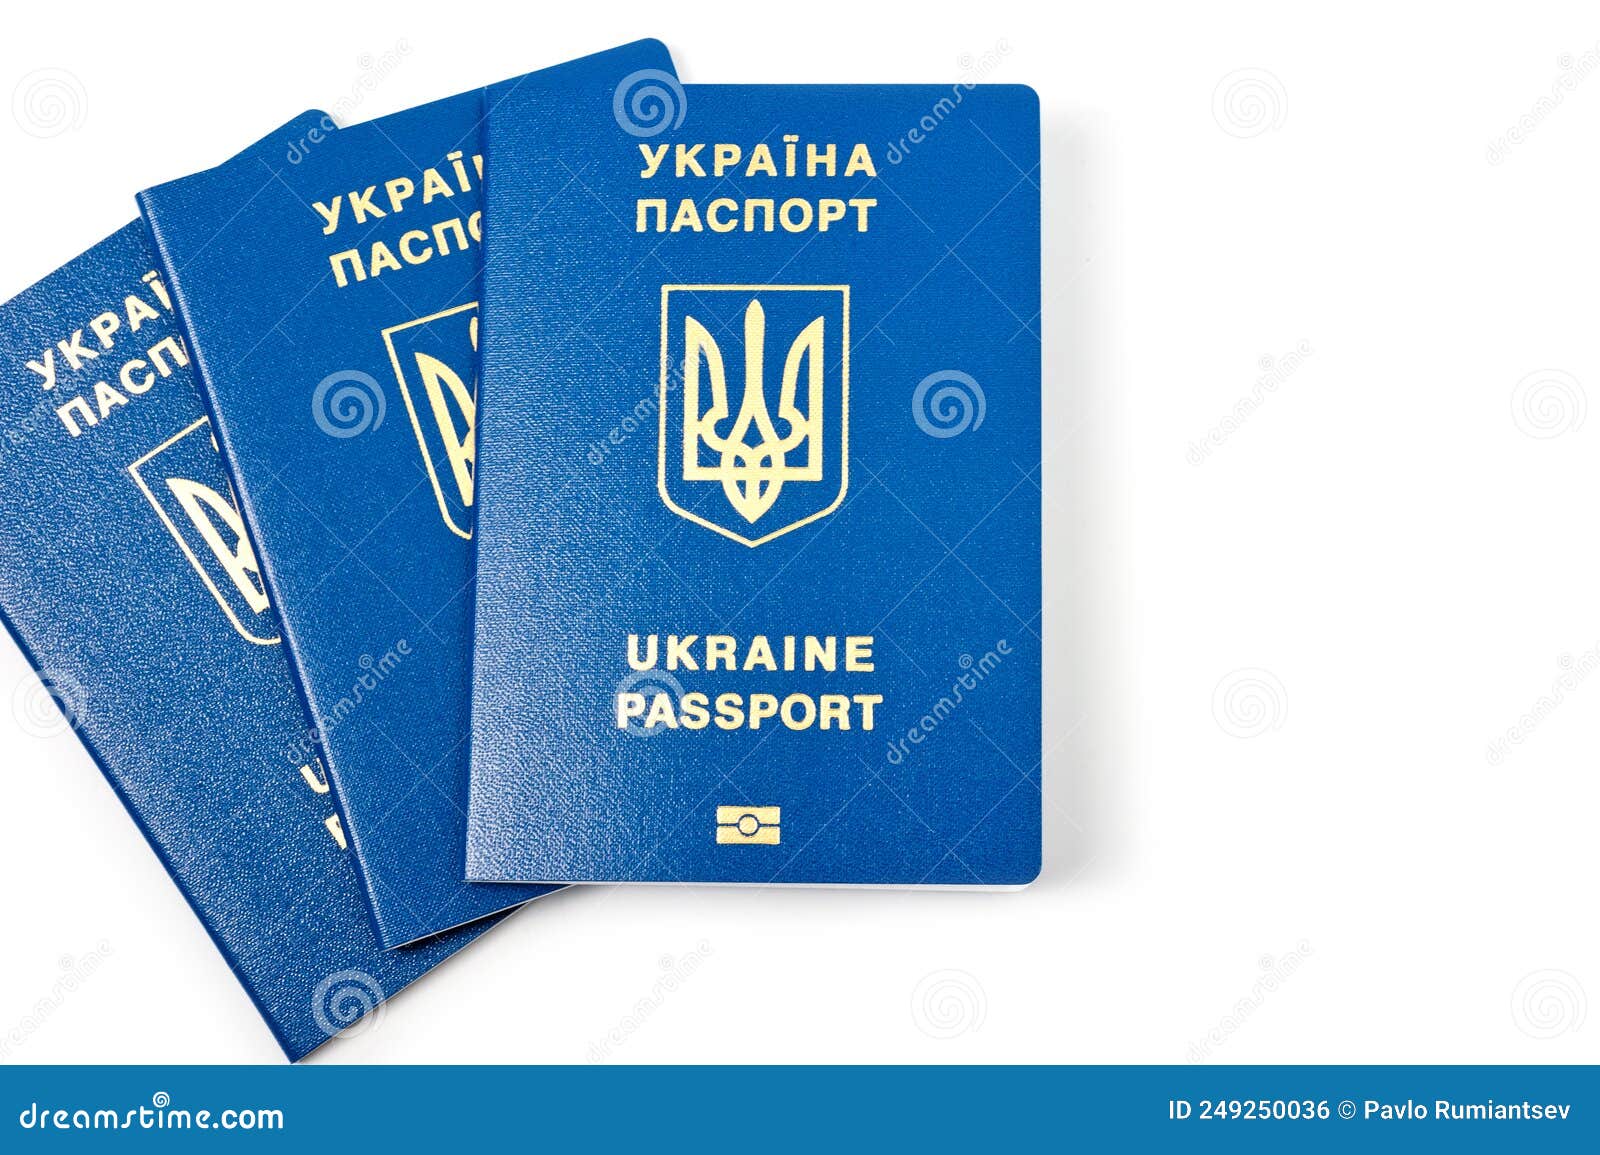 single journey travel document ukraine